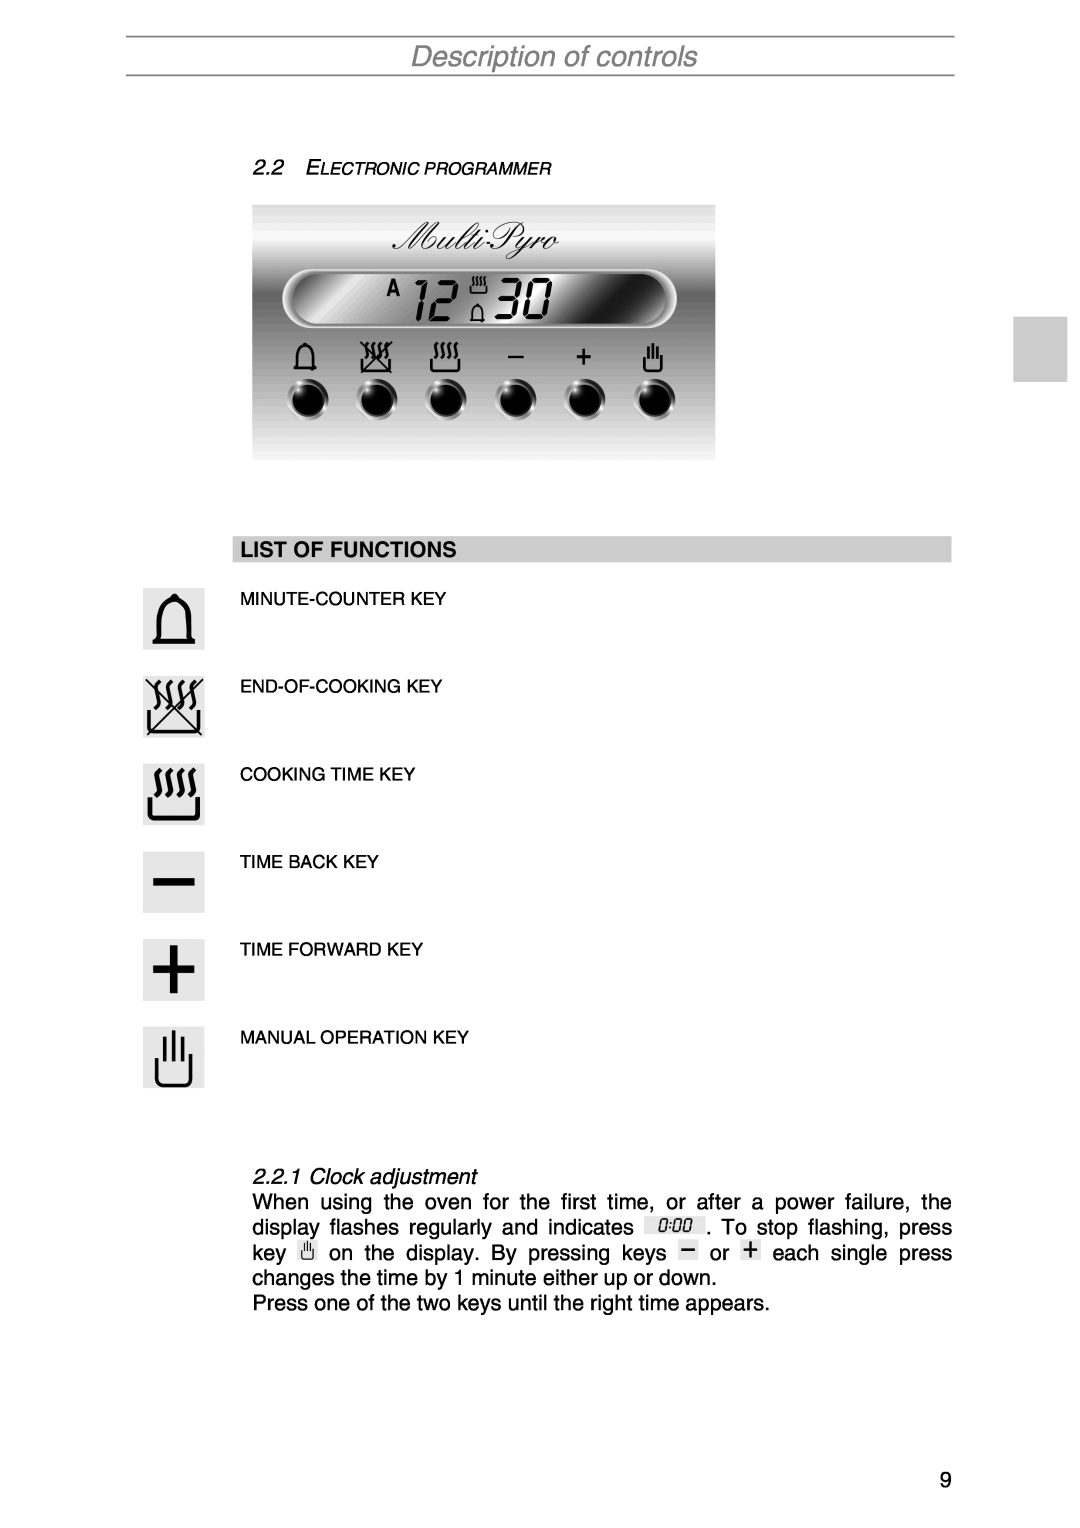 Smeg SIL290X manual List Of Functions, Description of controls, Clock adjustment 